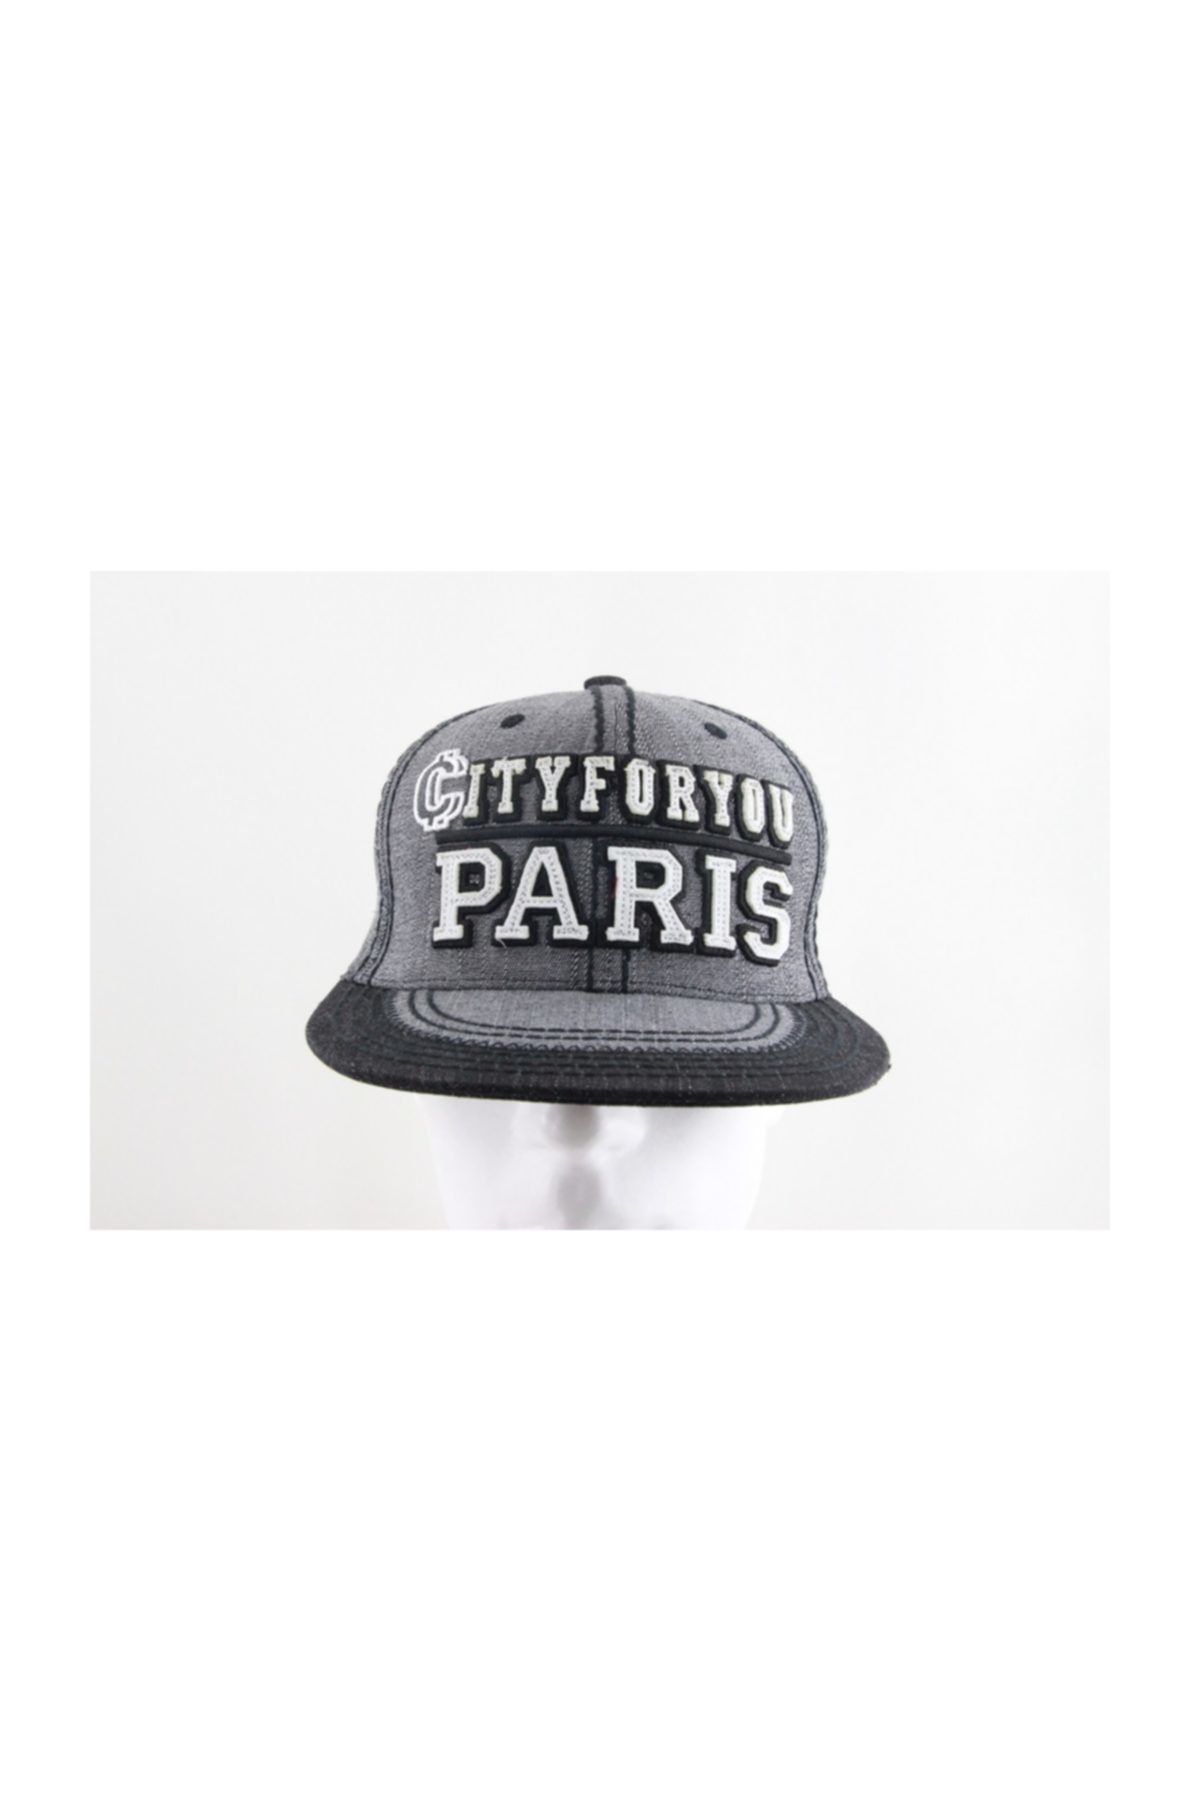 Fonem City Paris Pamuklu Unisex Hiphop Cap Şapka Siyah